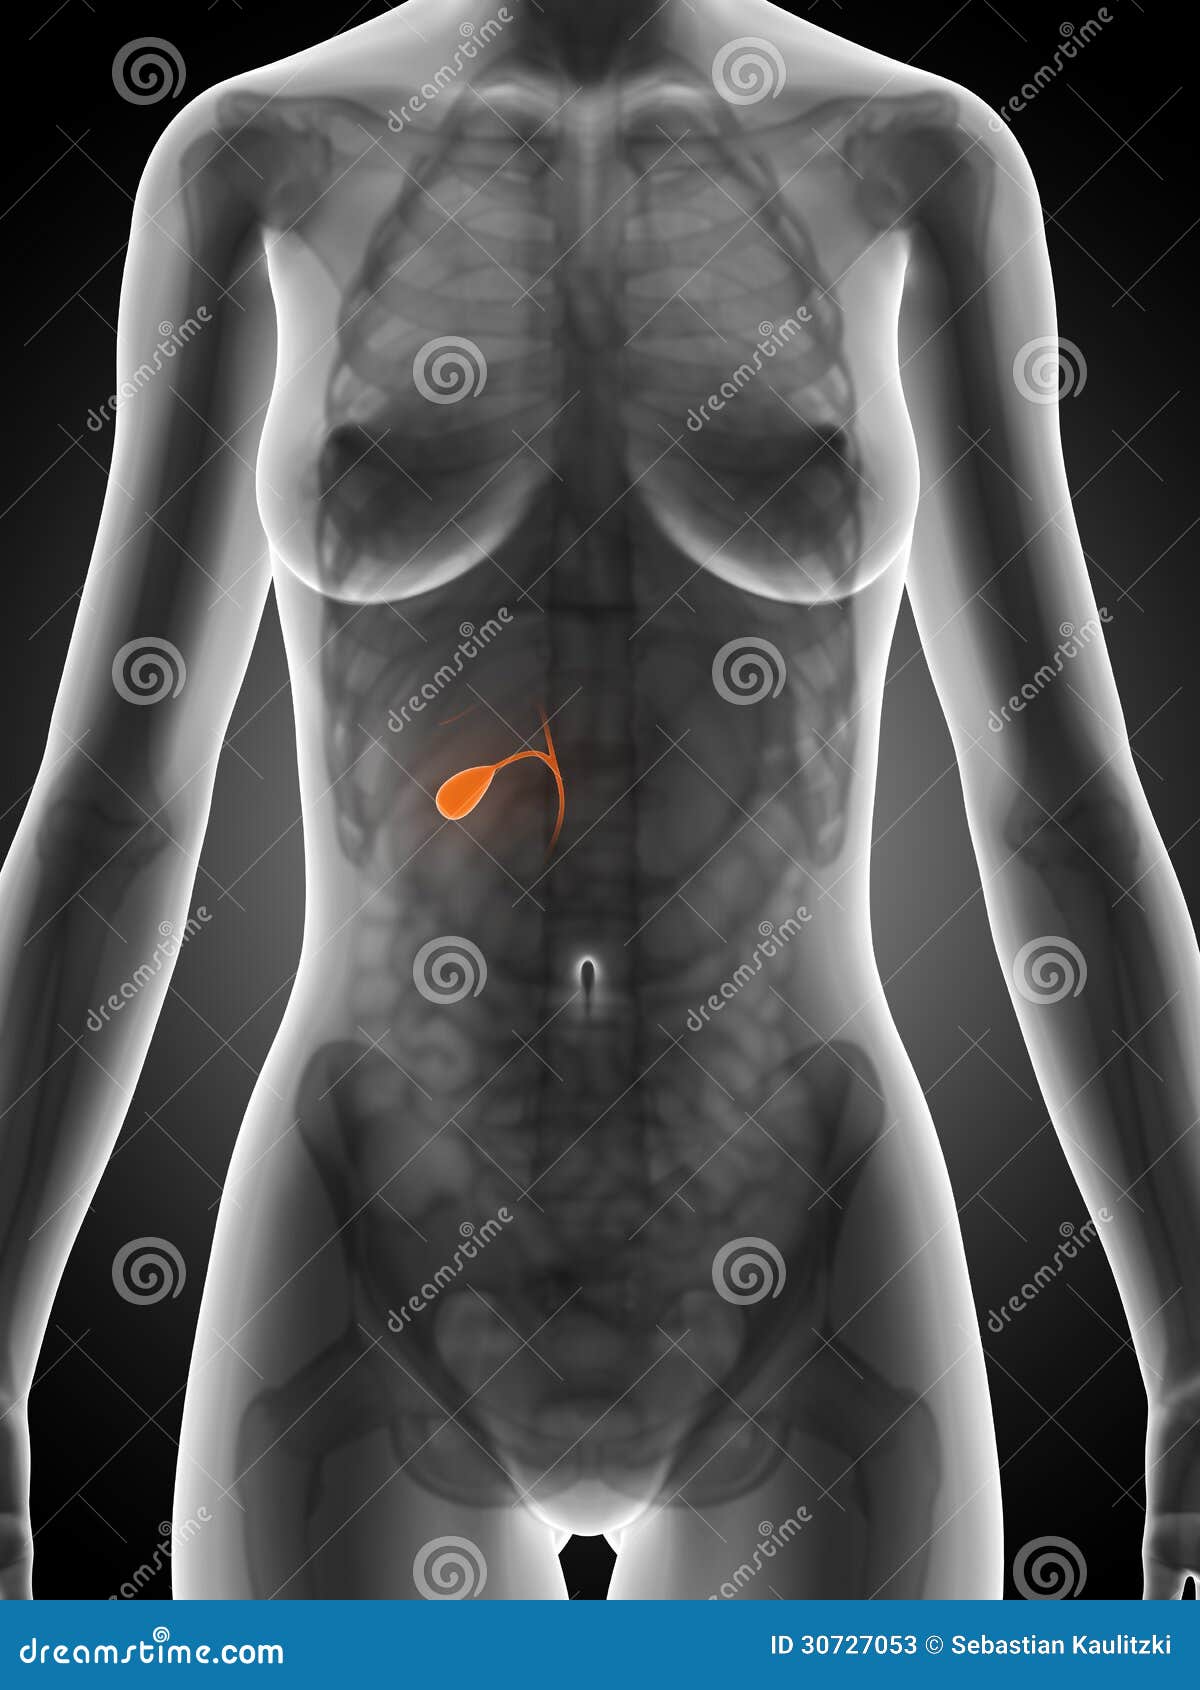 Highlighted Female Gallbladder Stock Photos - Image: 30727053